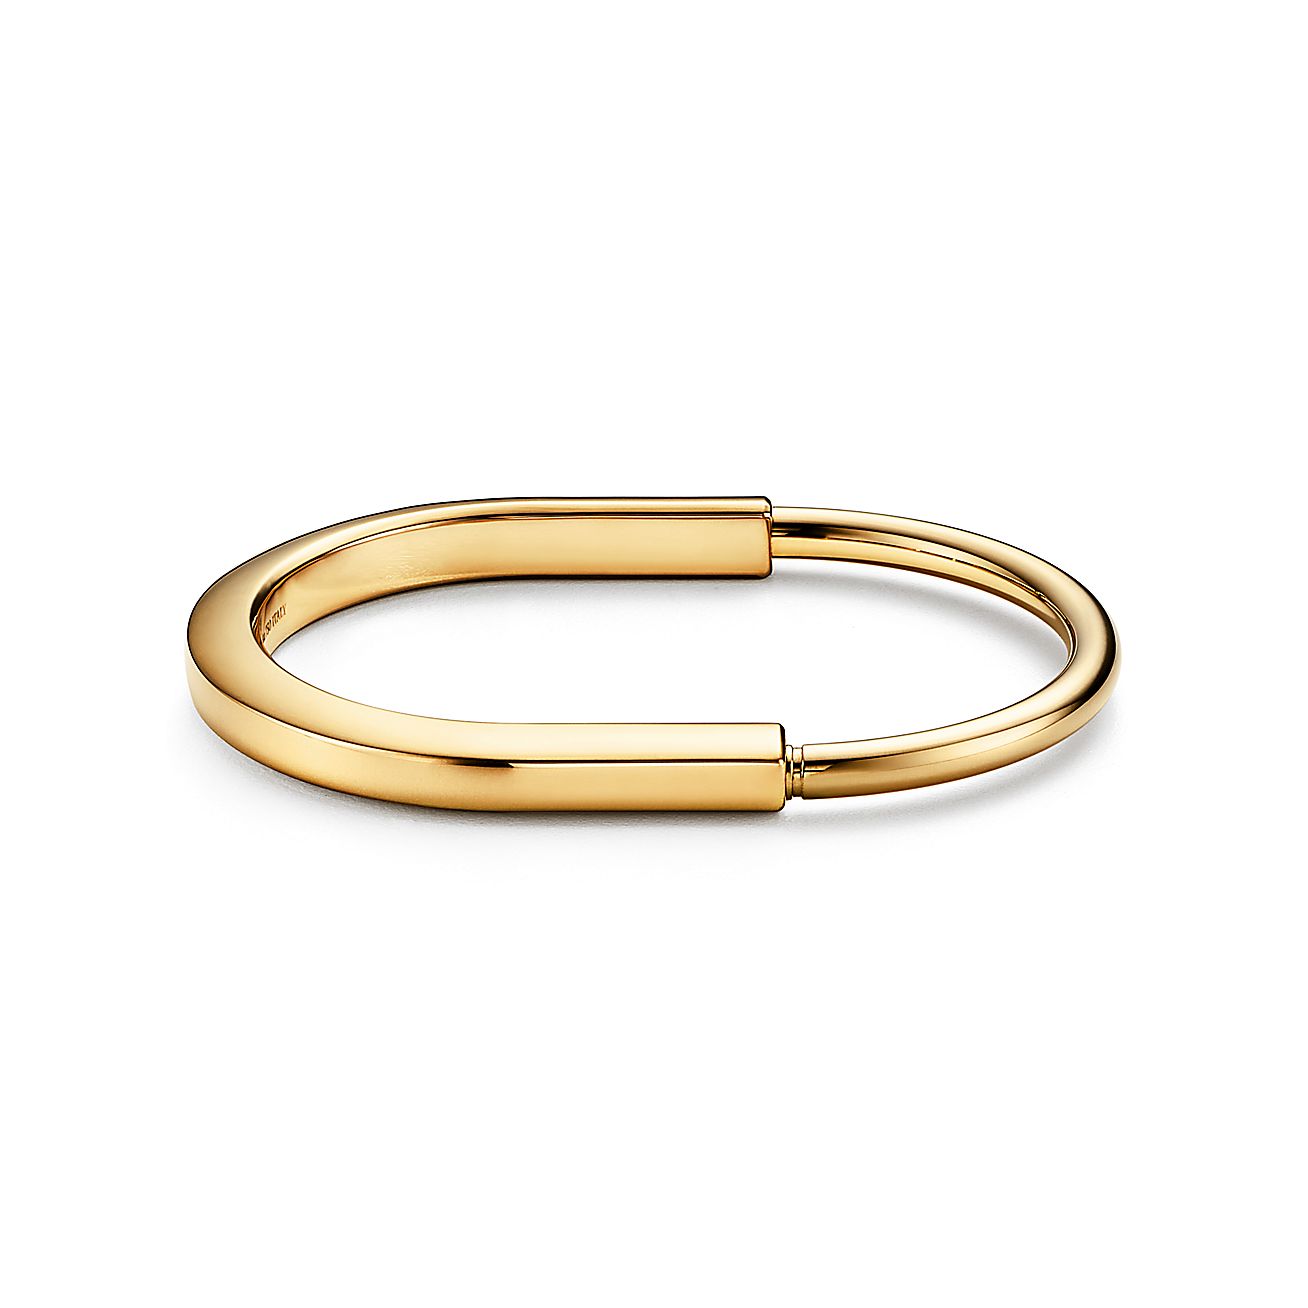 Tiffany Lock Bangle Bracelet in Yellow Gold, Size: Extra Large |Lock Men's and Women's Bracelet